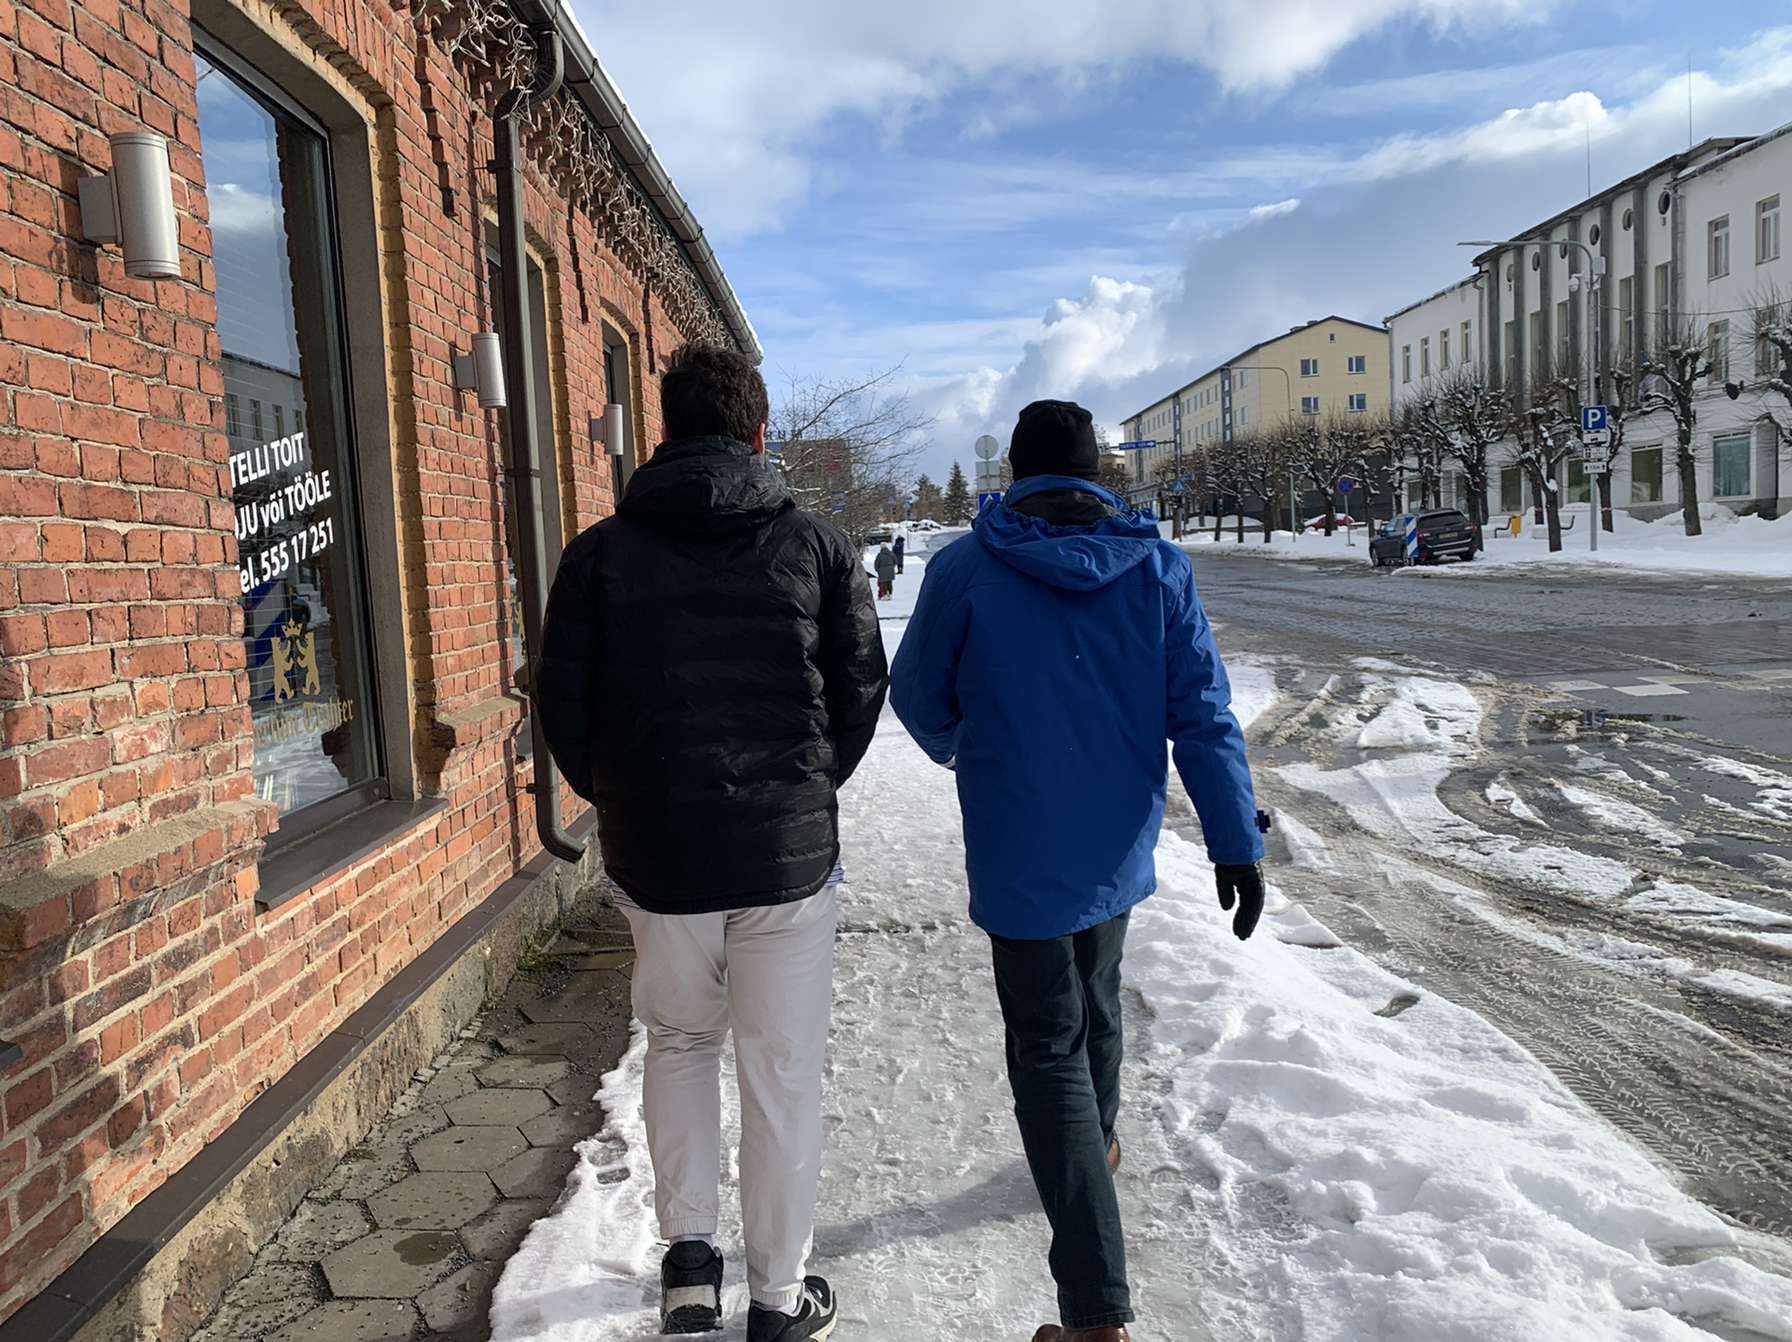 Walking the icy sidewalks in Estonia can be a risky undertaking